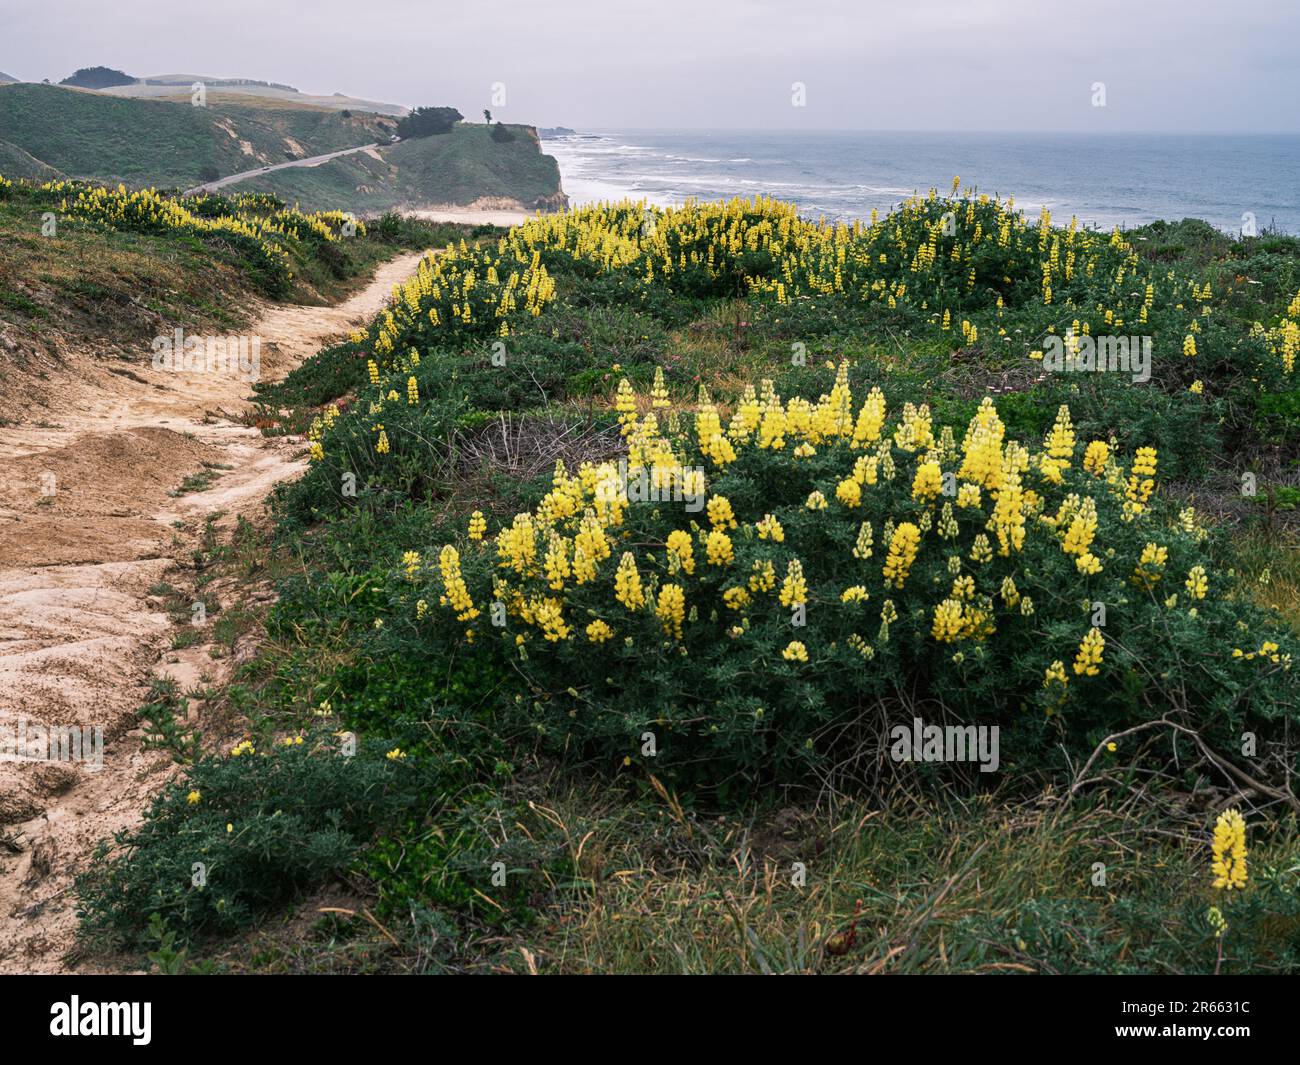 A coastal path towards the beach amongst wild yellow flowers Stock Photo